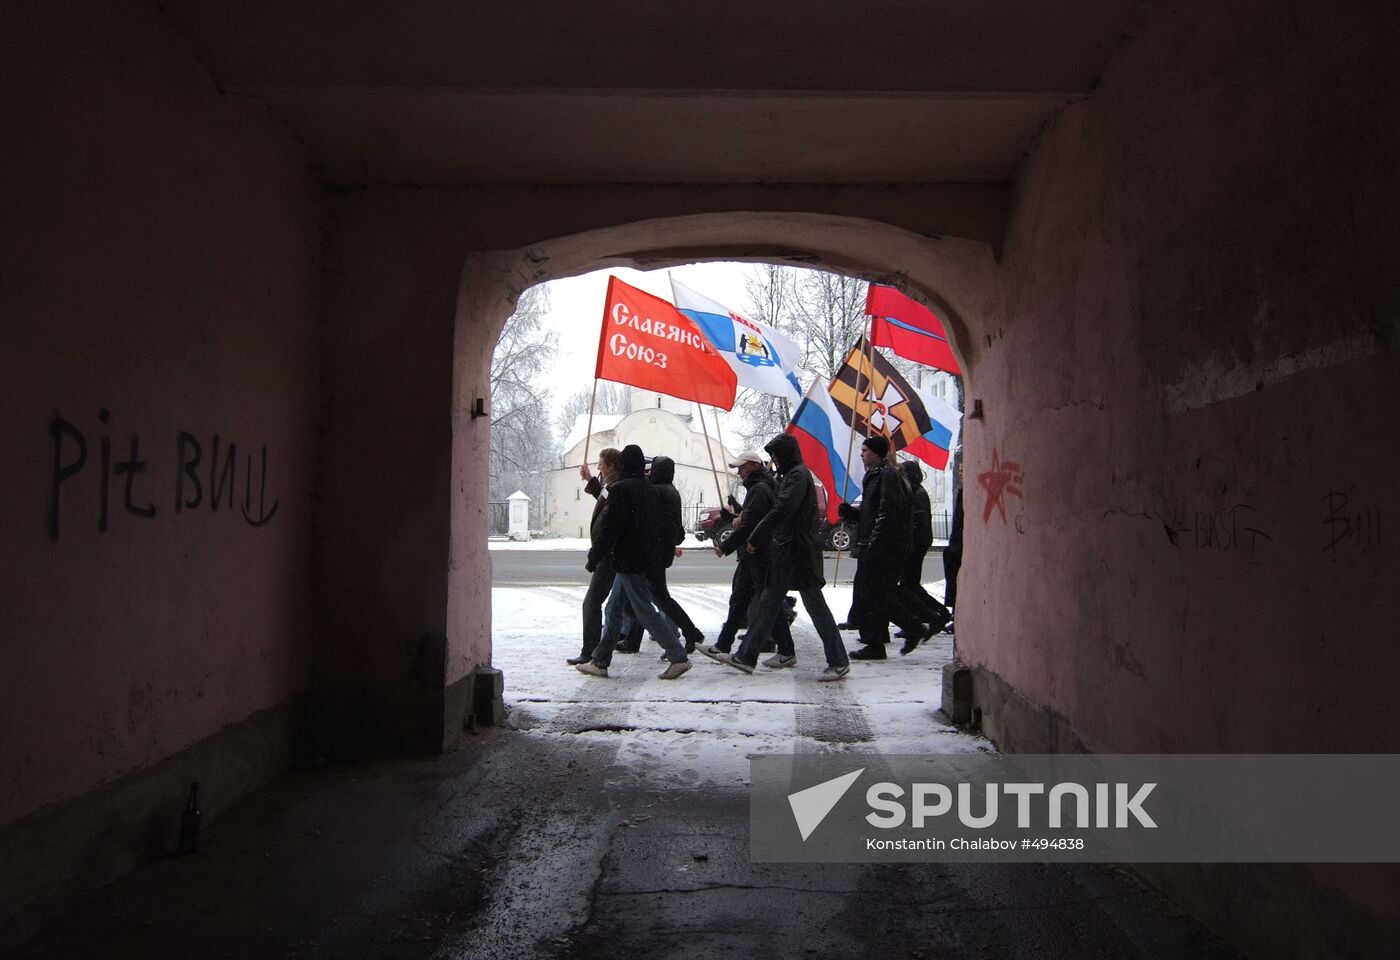 Nationalists hold rally in Veliky Novgorod to mark Unity Day